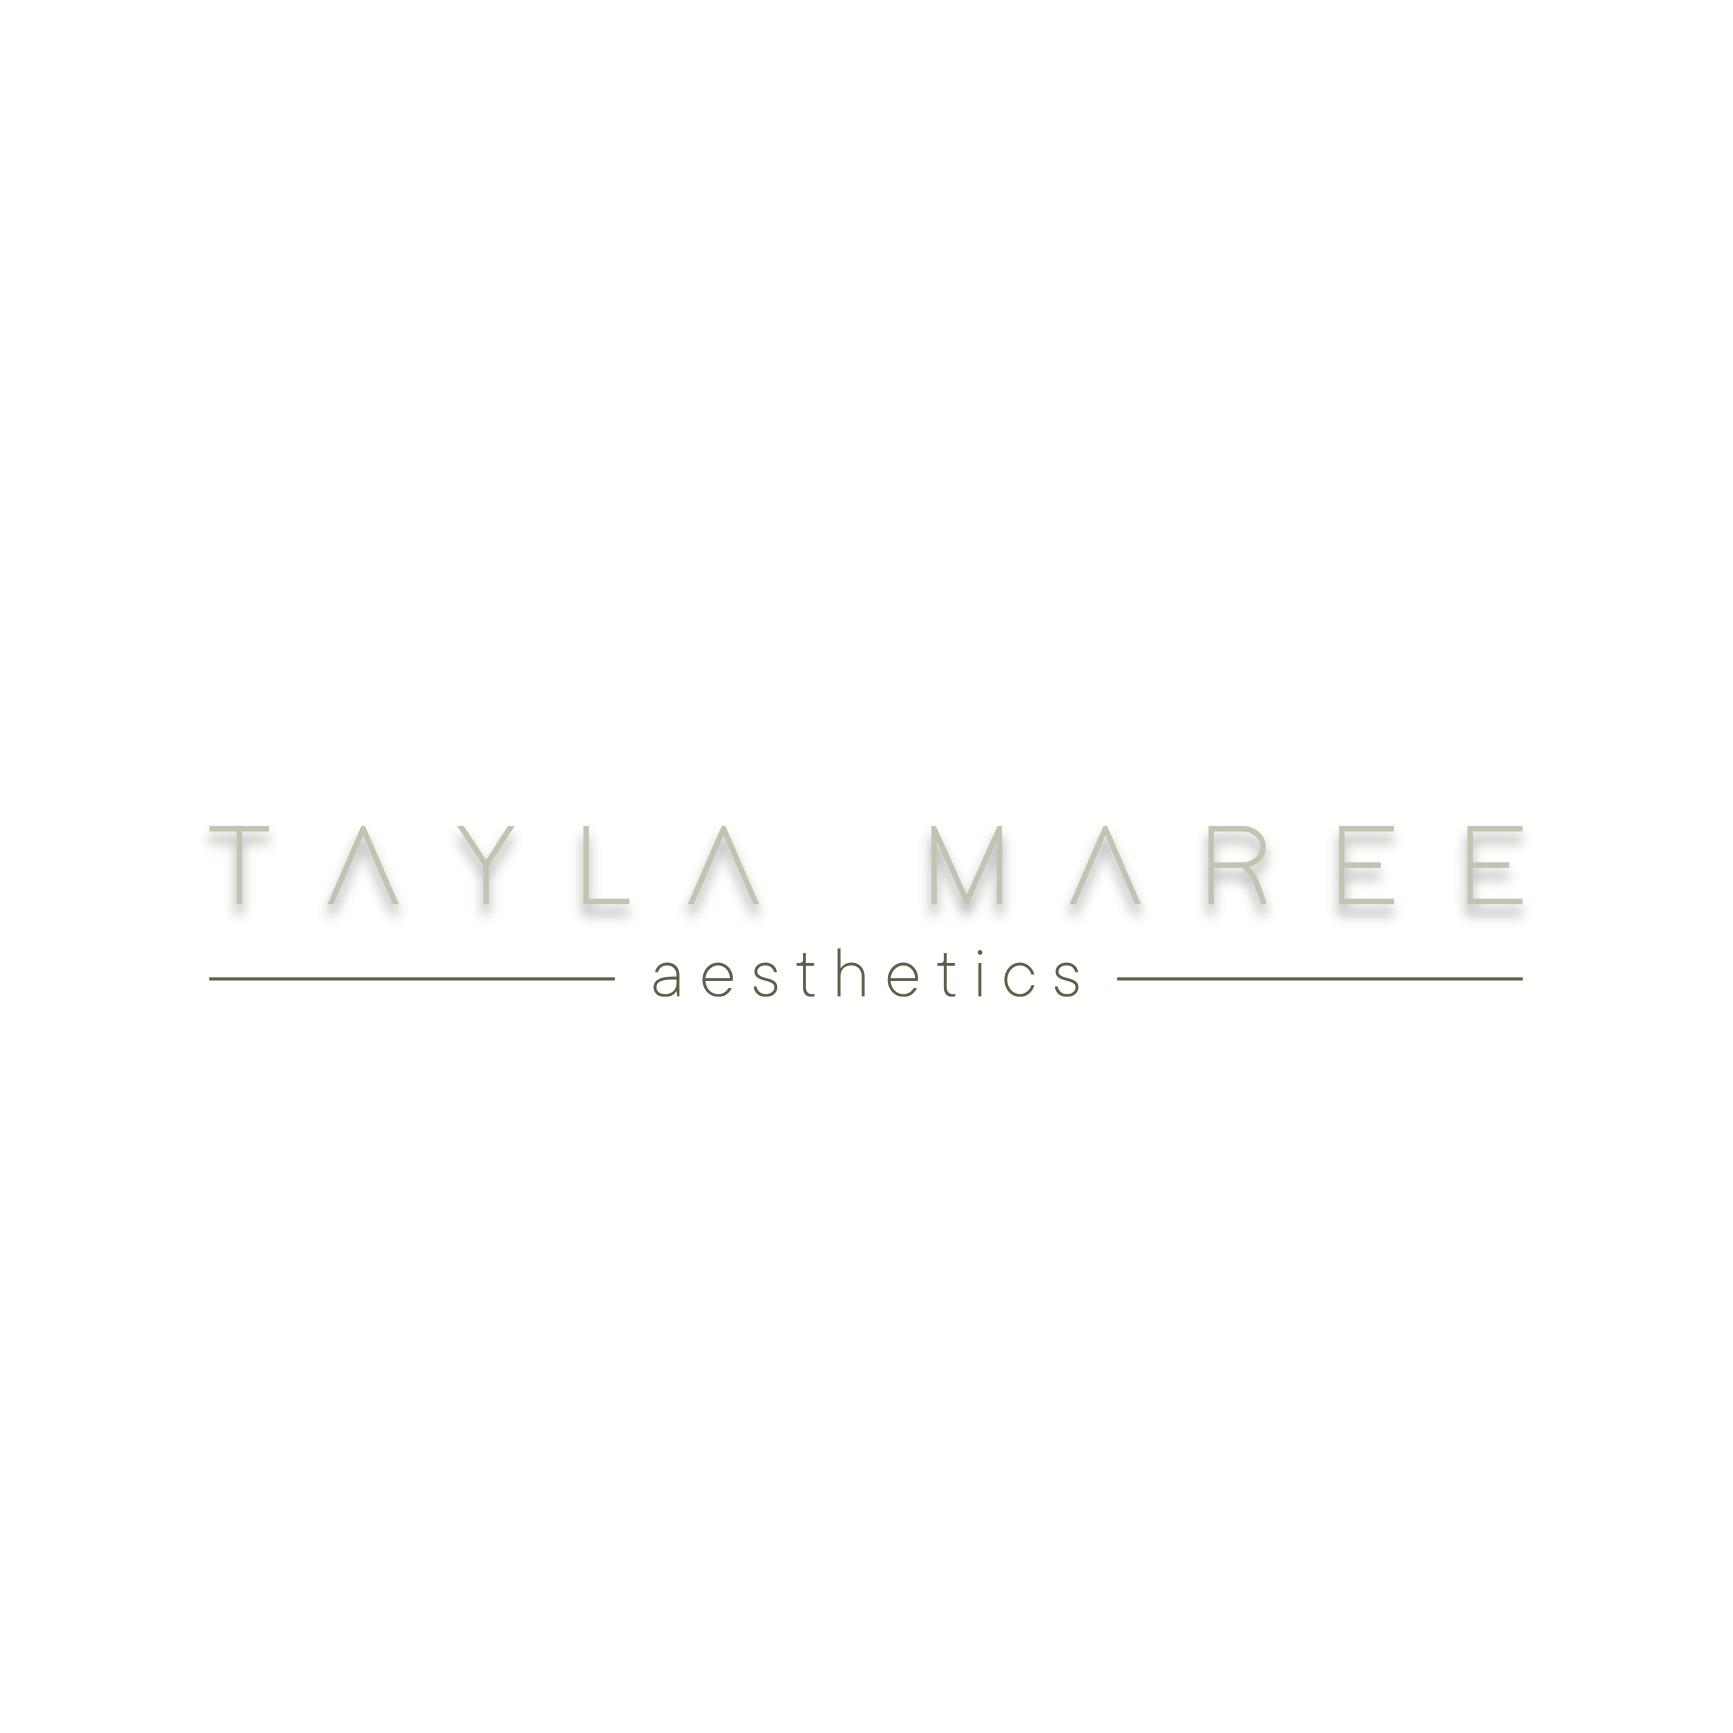 Tayla Maree Aesthetics